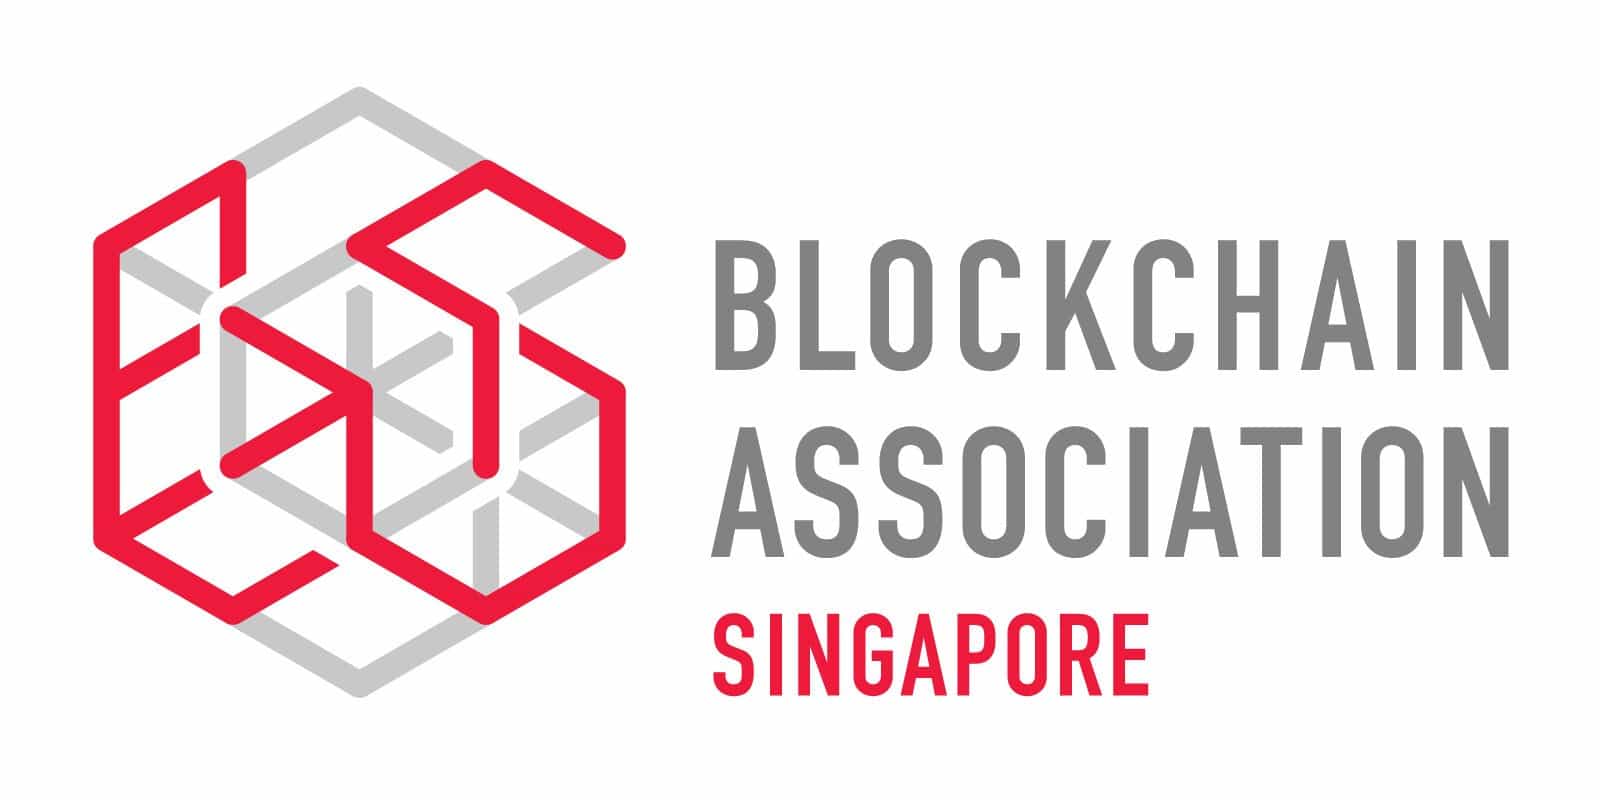 Blockchain Association Singapore, Singapore charity NFT auction, crypto, blockchain.